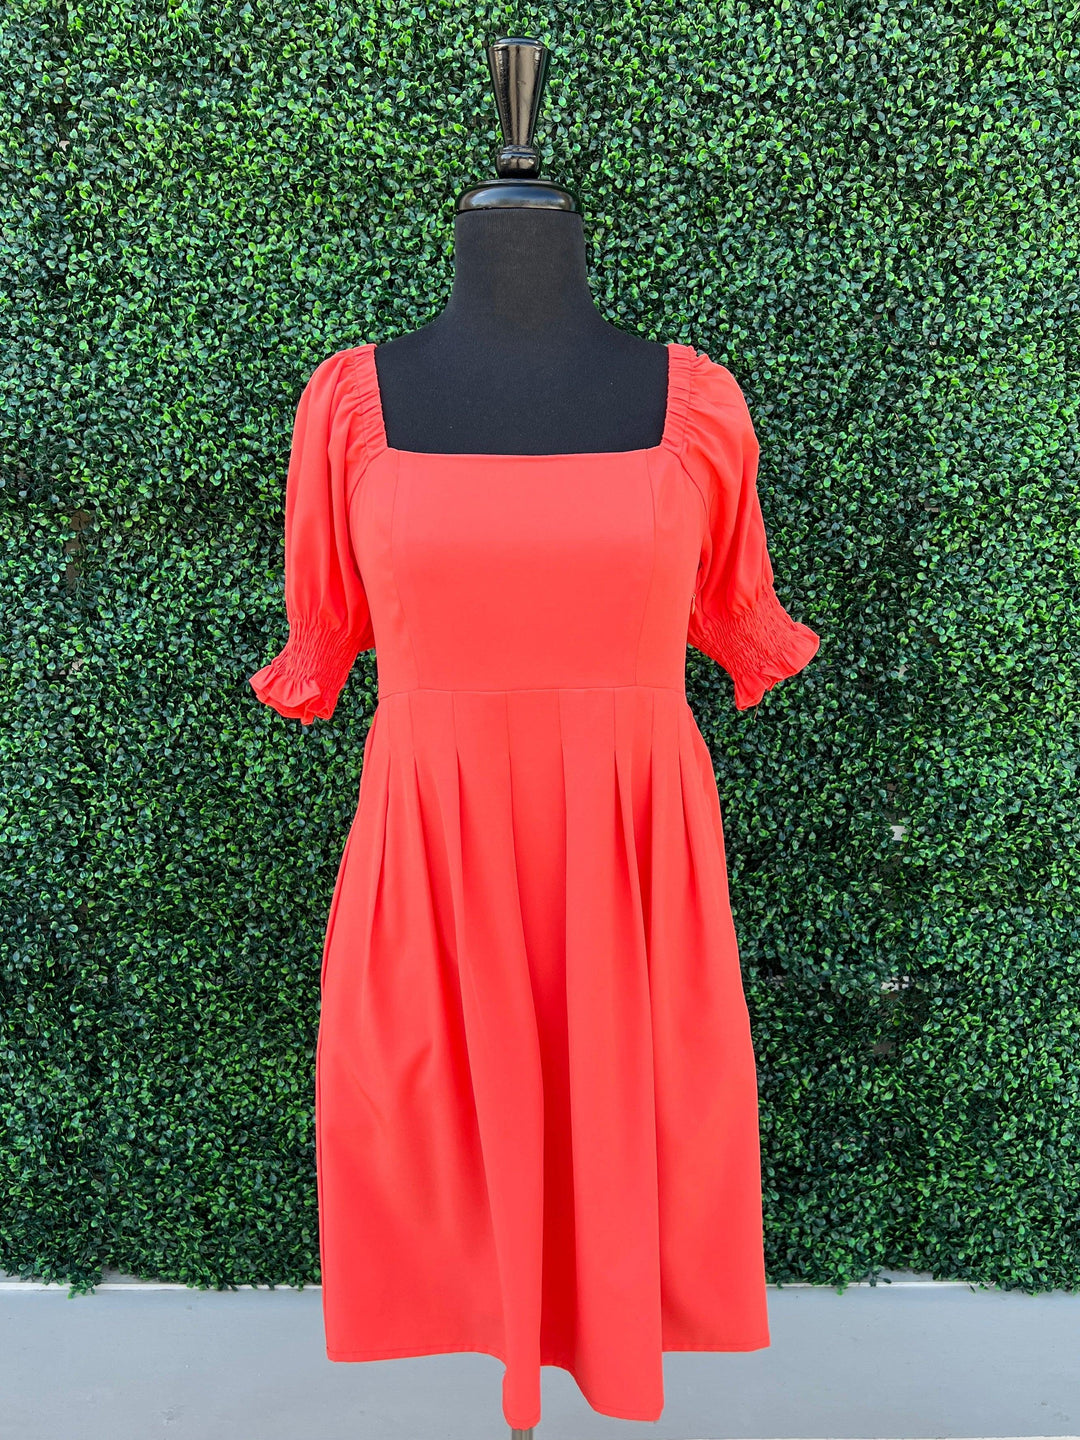 red orange pleated dress square neck online jade and joy joy